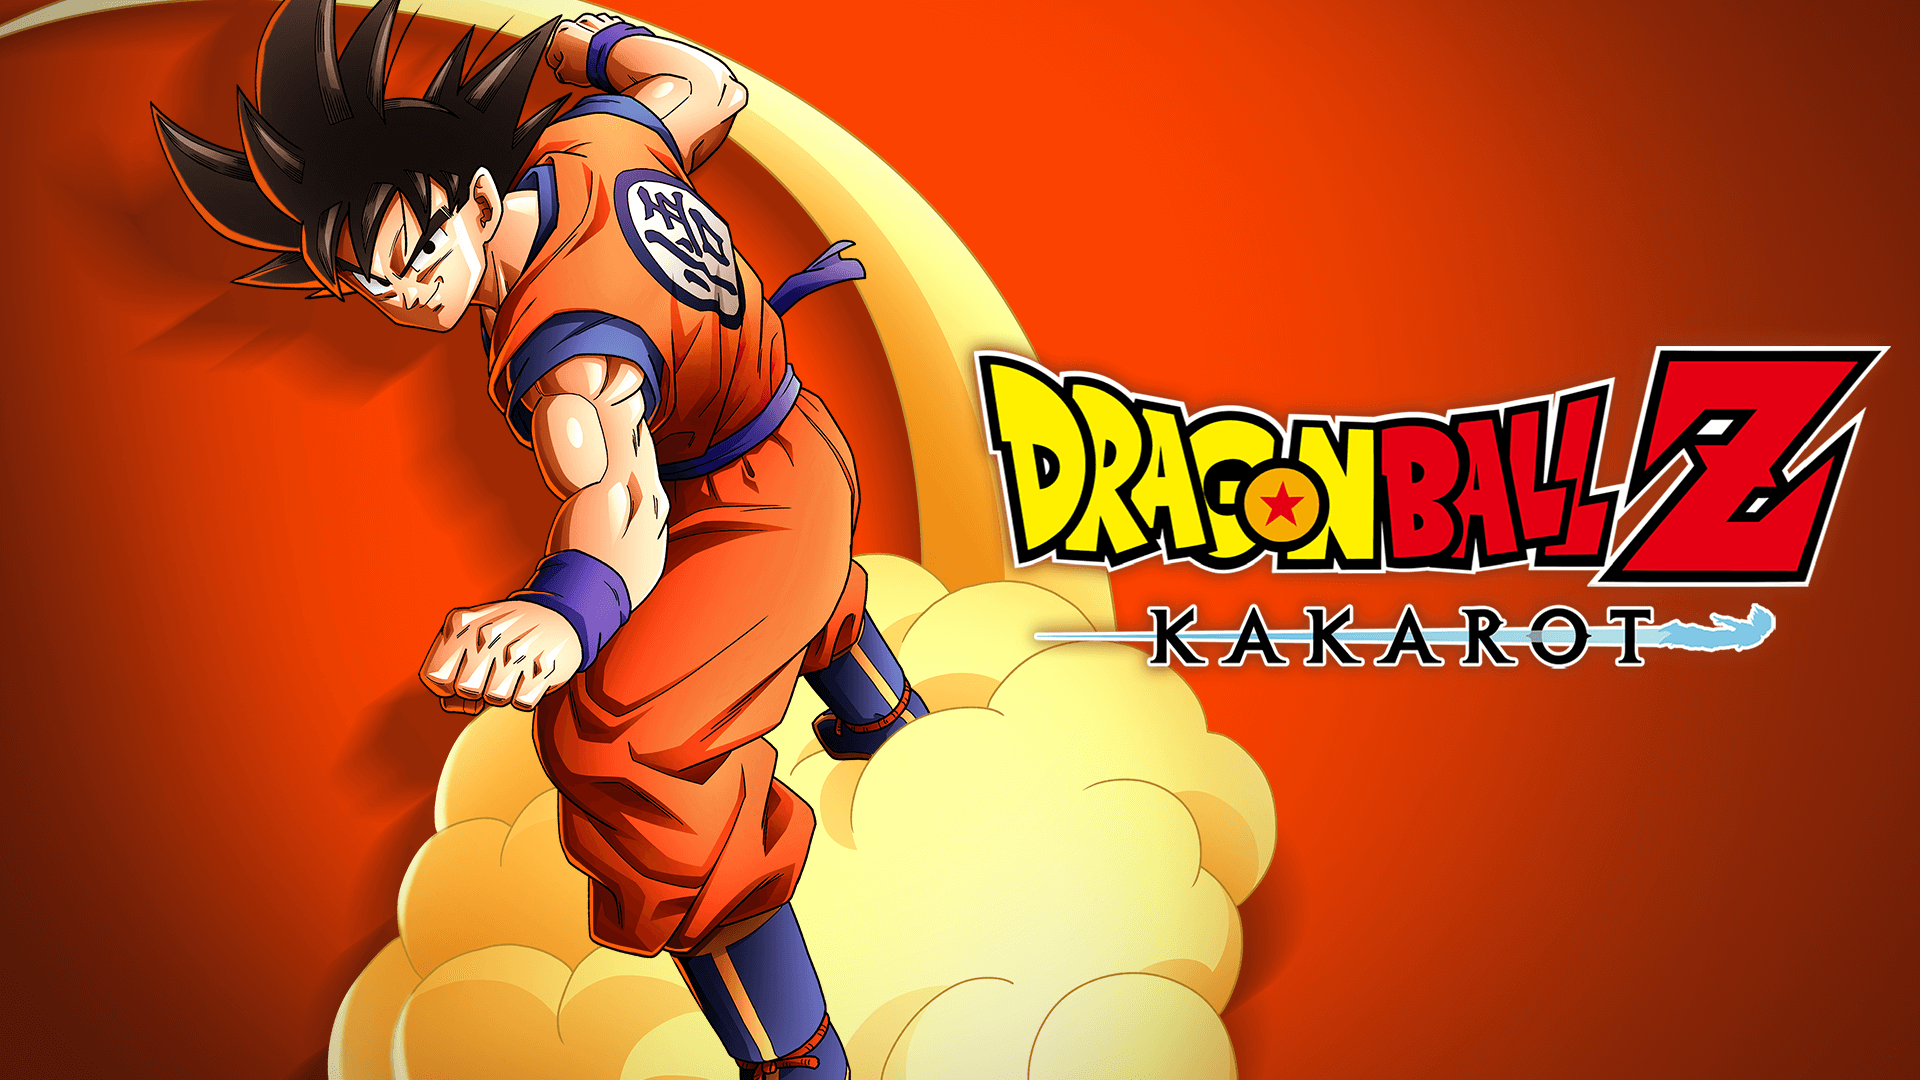 Dragon Ball Z: Kakarot Review - Can't Reach Super Saiyan